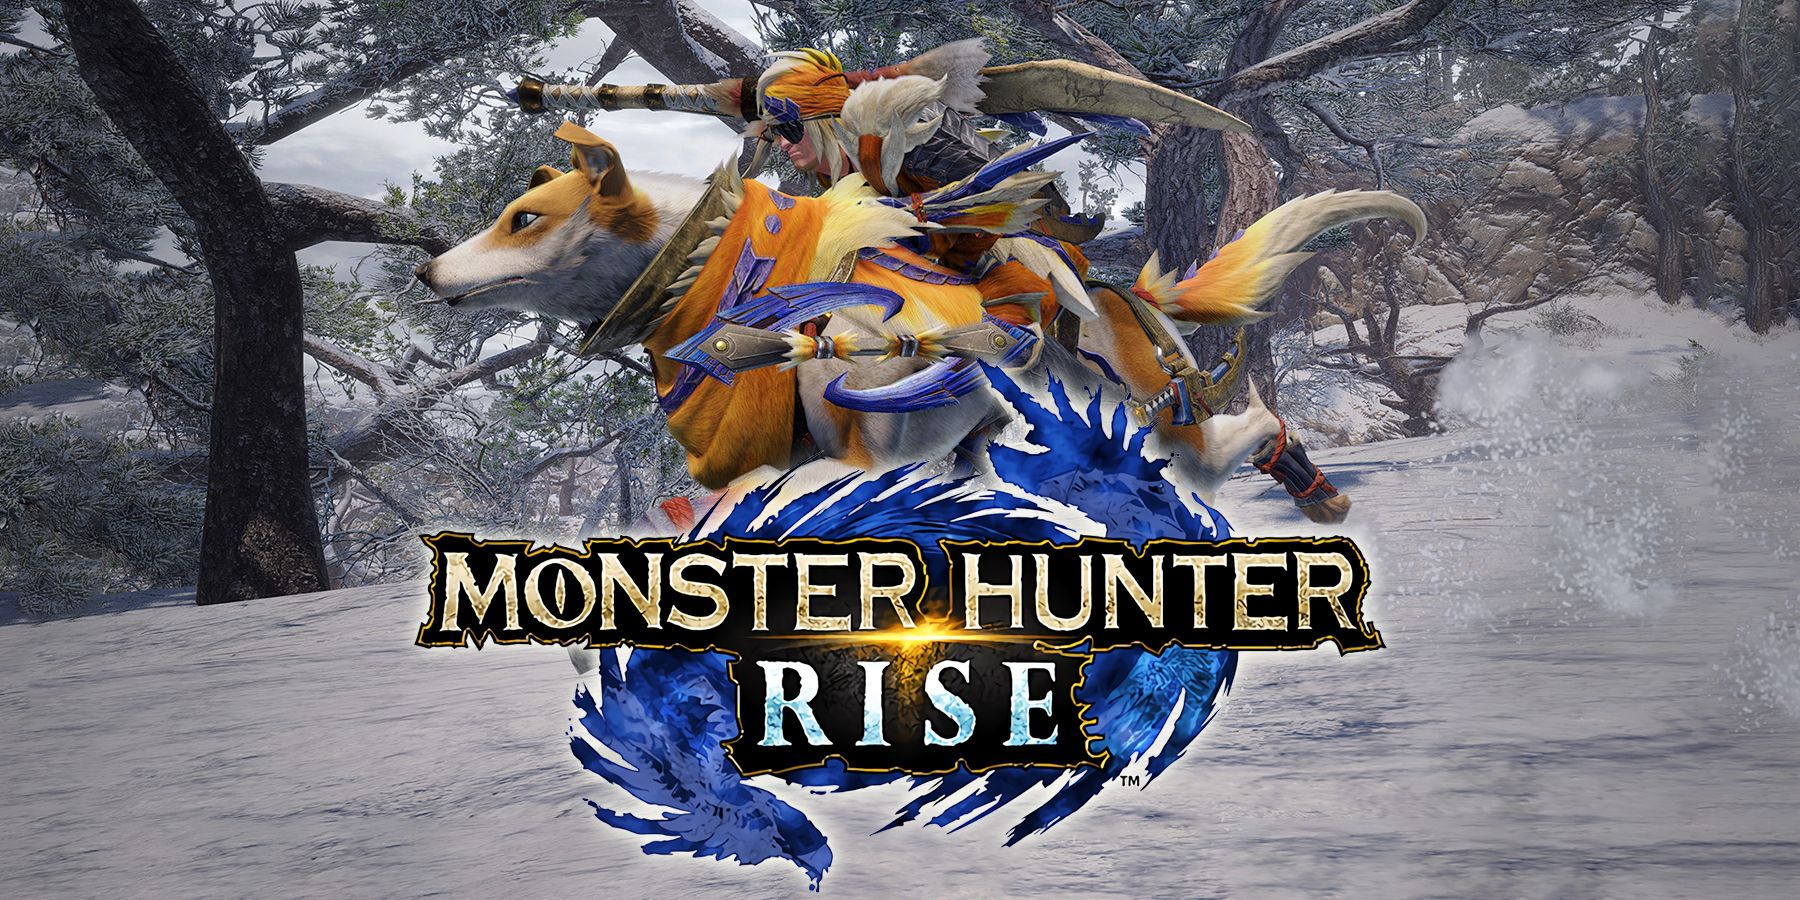 Monster Hunter Rise Steam winter rider promo screenshot with blue game logo